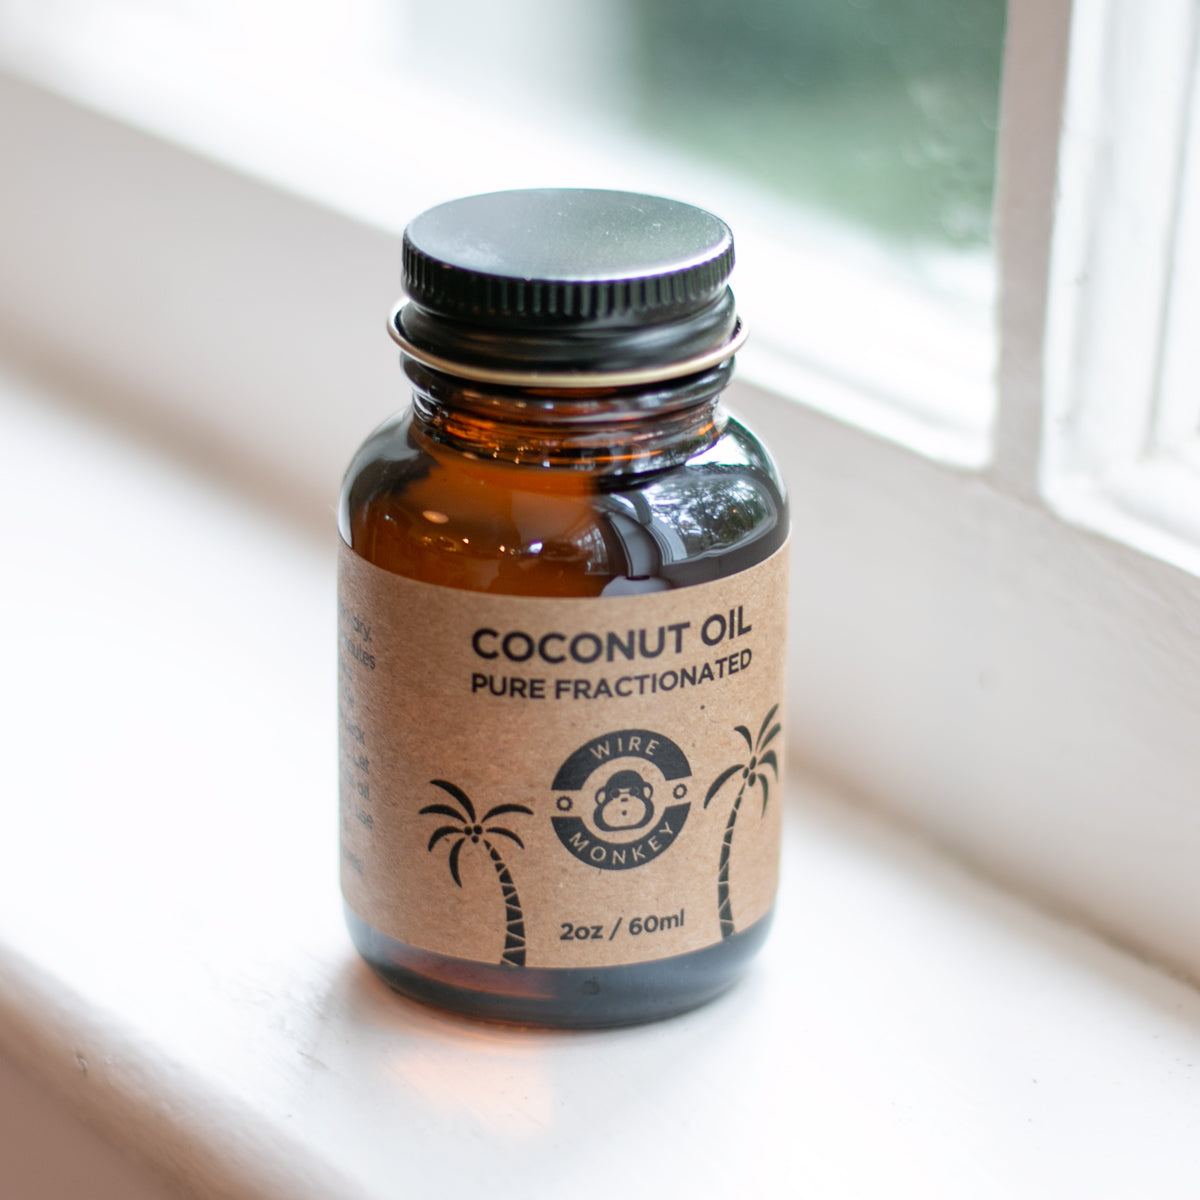 Brown glass bottle of fractionated coconut oil